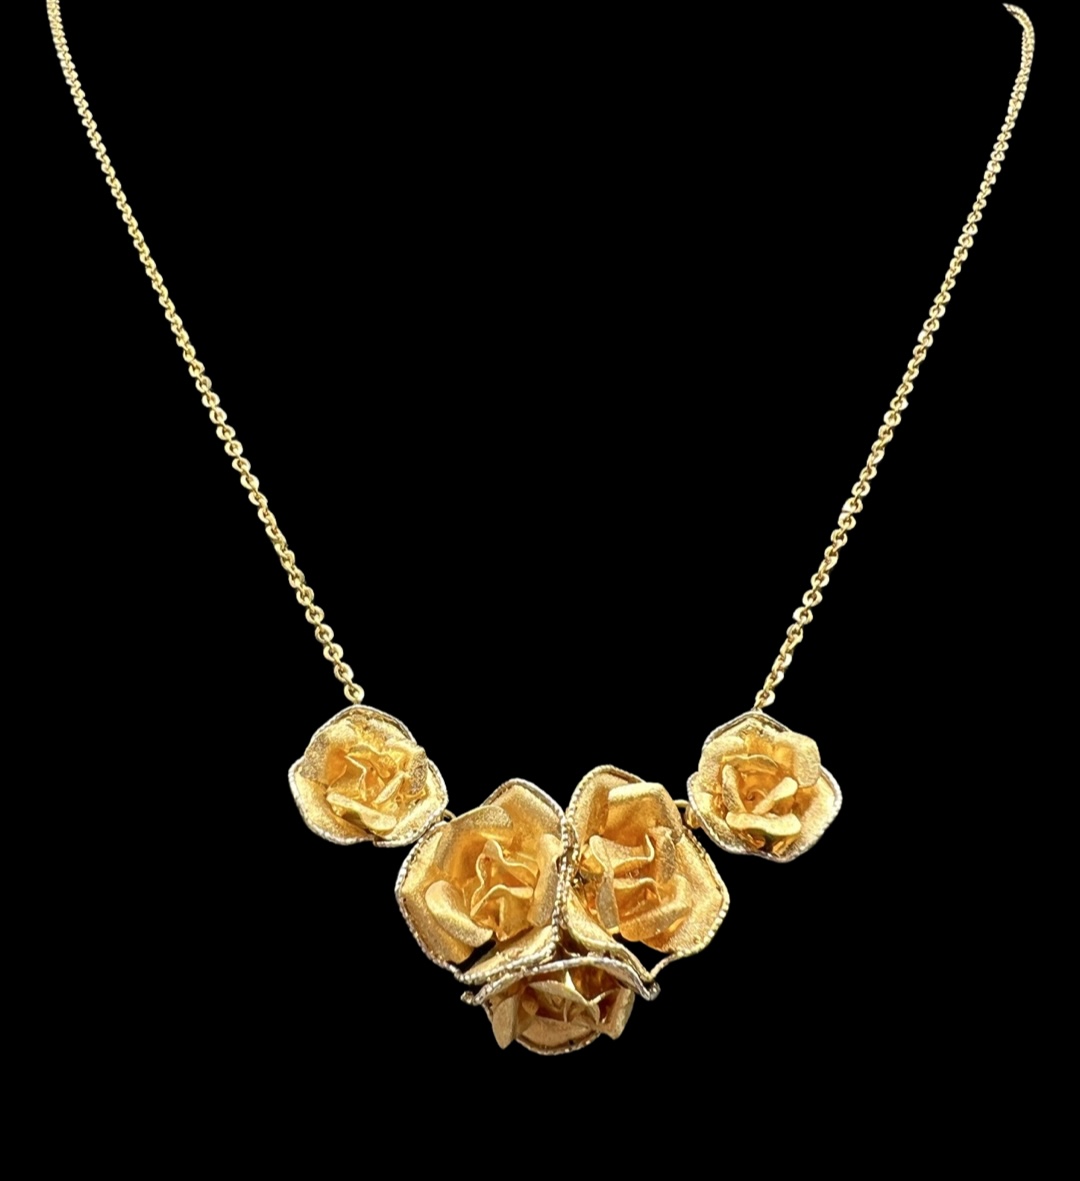 Stunning 18ct Gold & Diamond Designer Style Rose Shape Pendant & Chain 7.3grams - Boxed